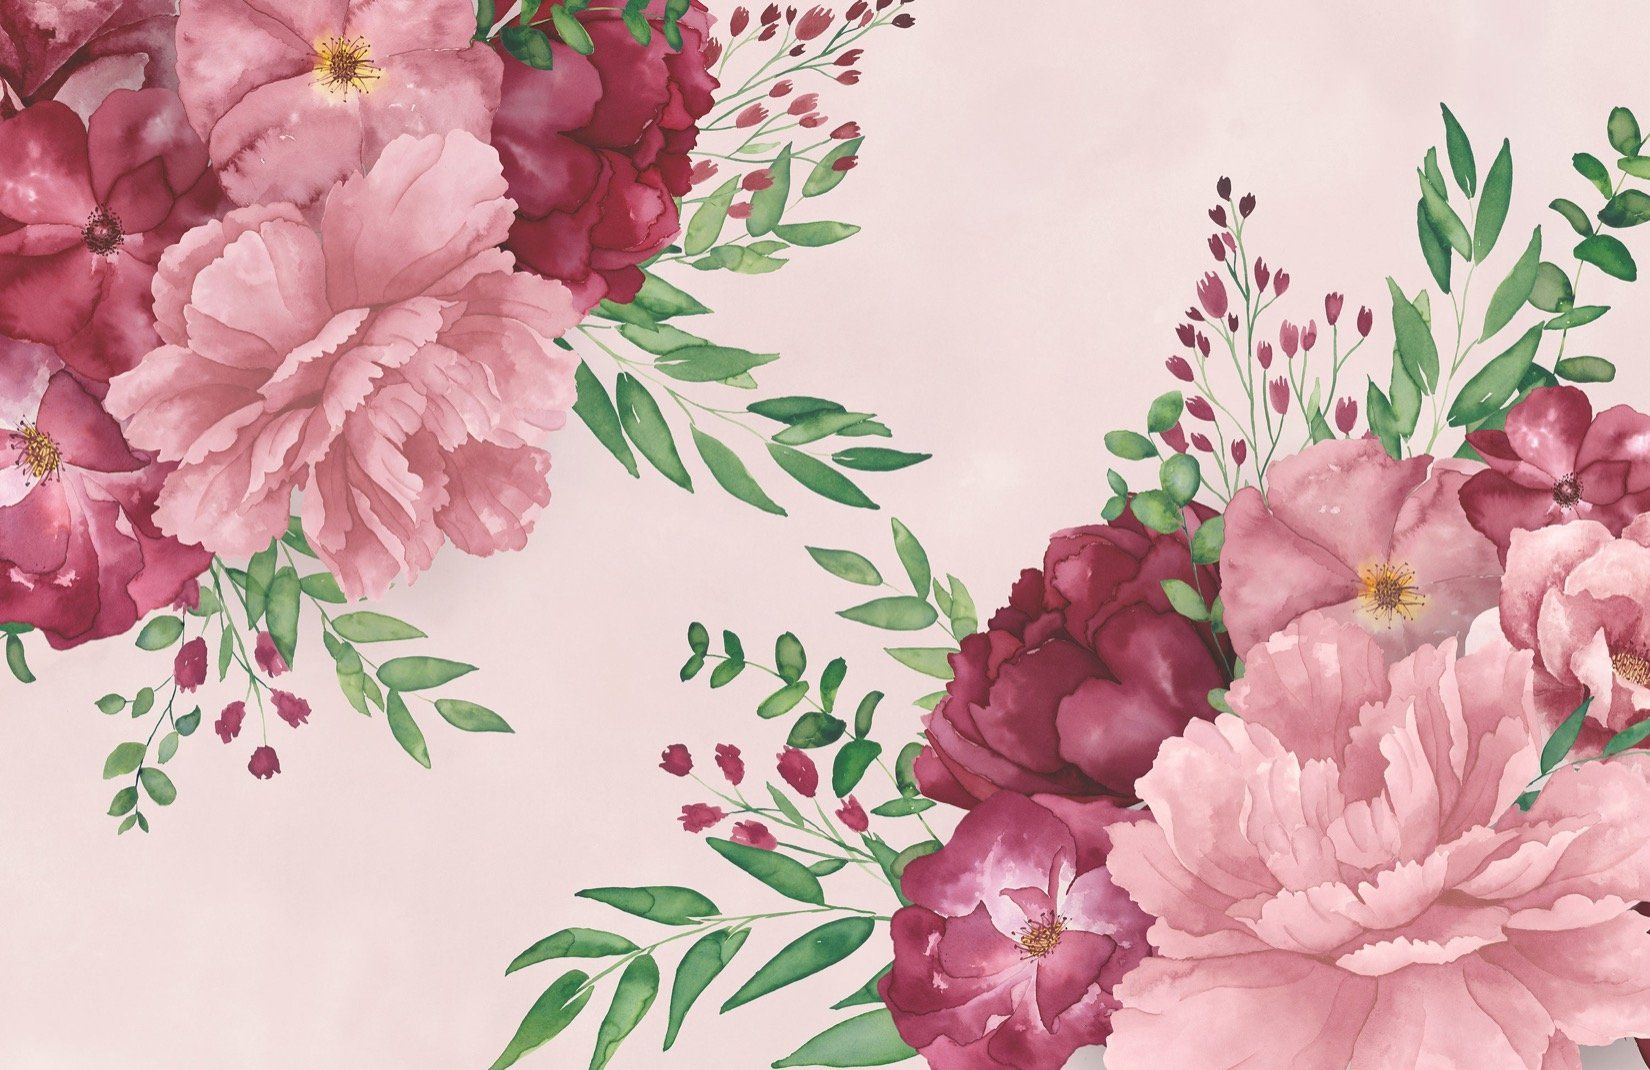 Light Pink Floral Wallpaper